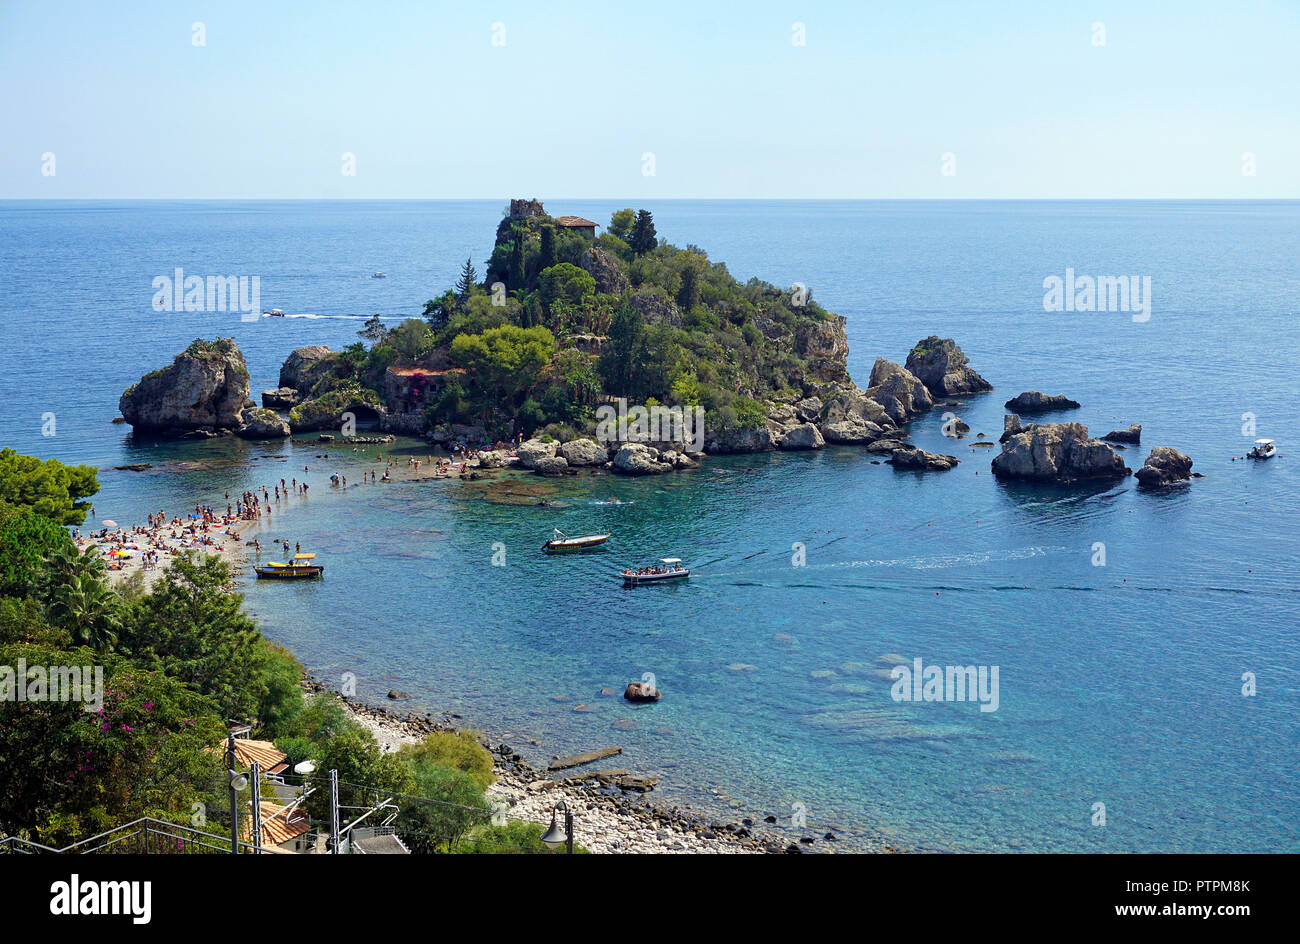 Isola Bella, beautiful tiny island and one of the landmarks of Taormina, Sicily, Italy Stock Photo